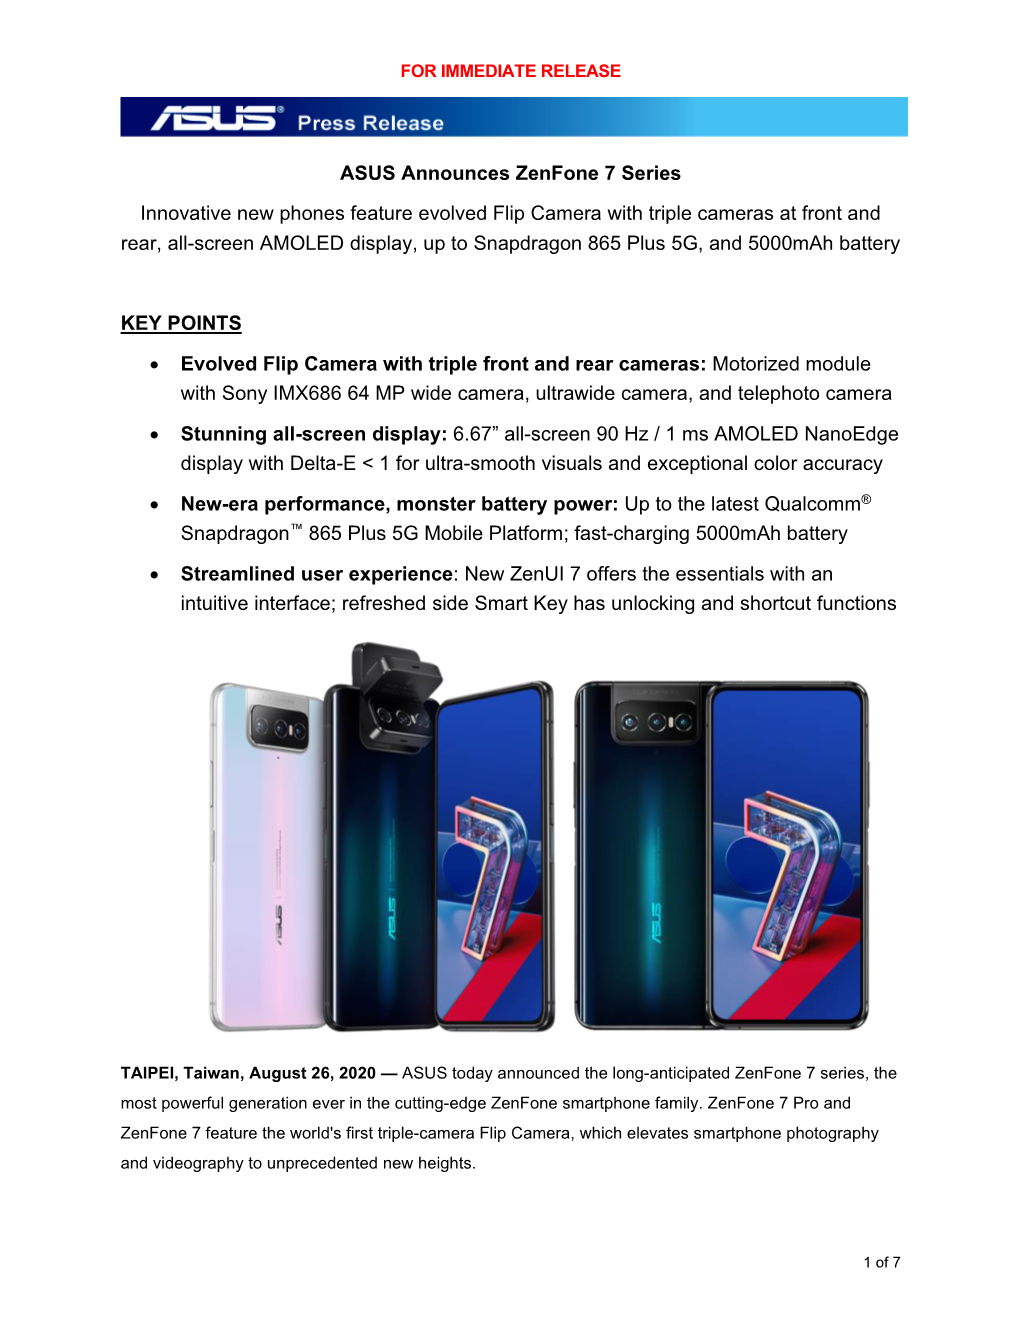 ASUS Announces Zenfone 7 Series Innovative New Phones Feature